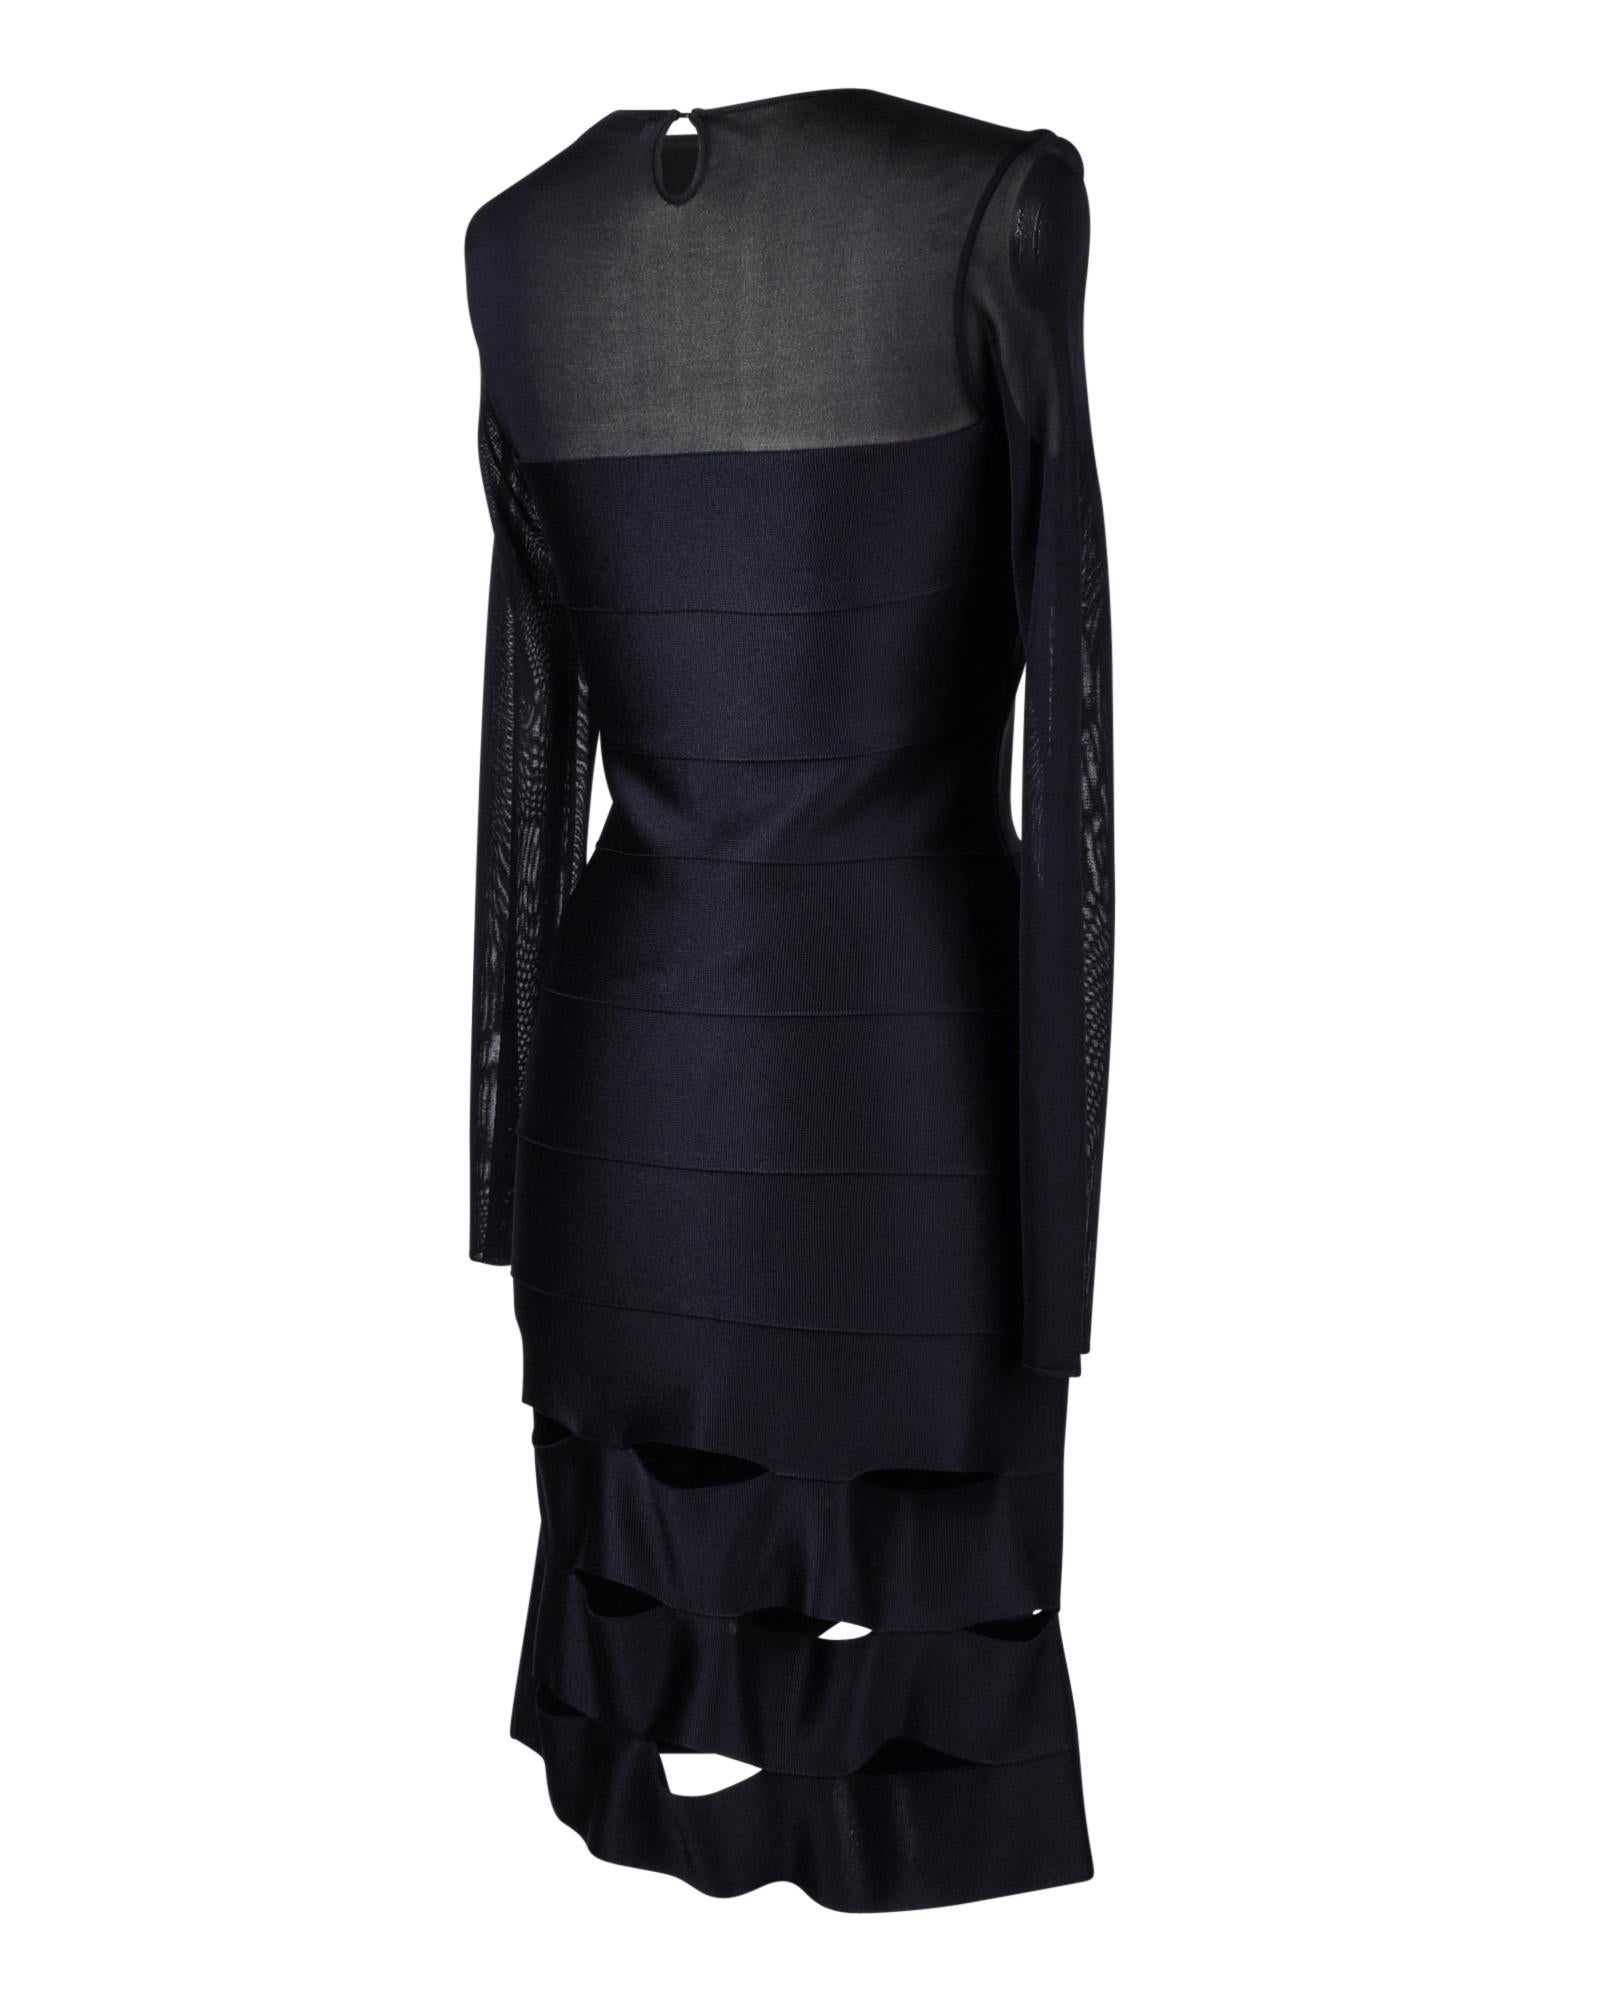 Christian Dior Dress Black Bandage and Mesh 40 / 8 2